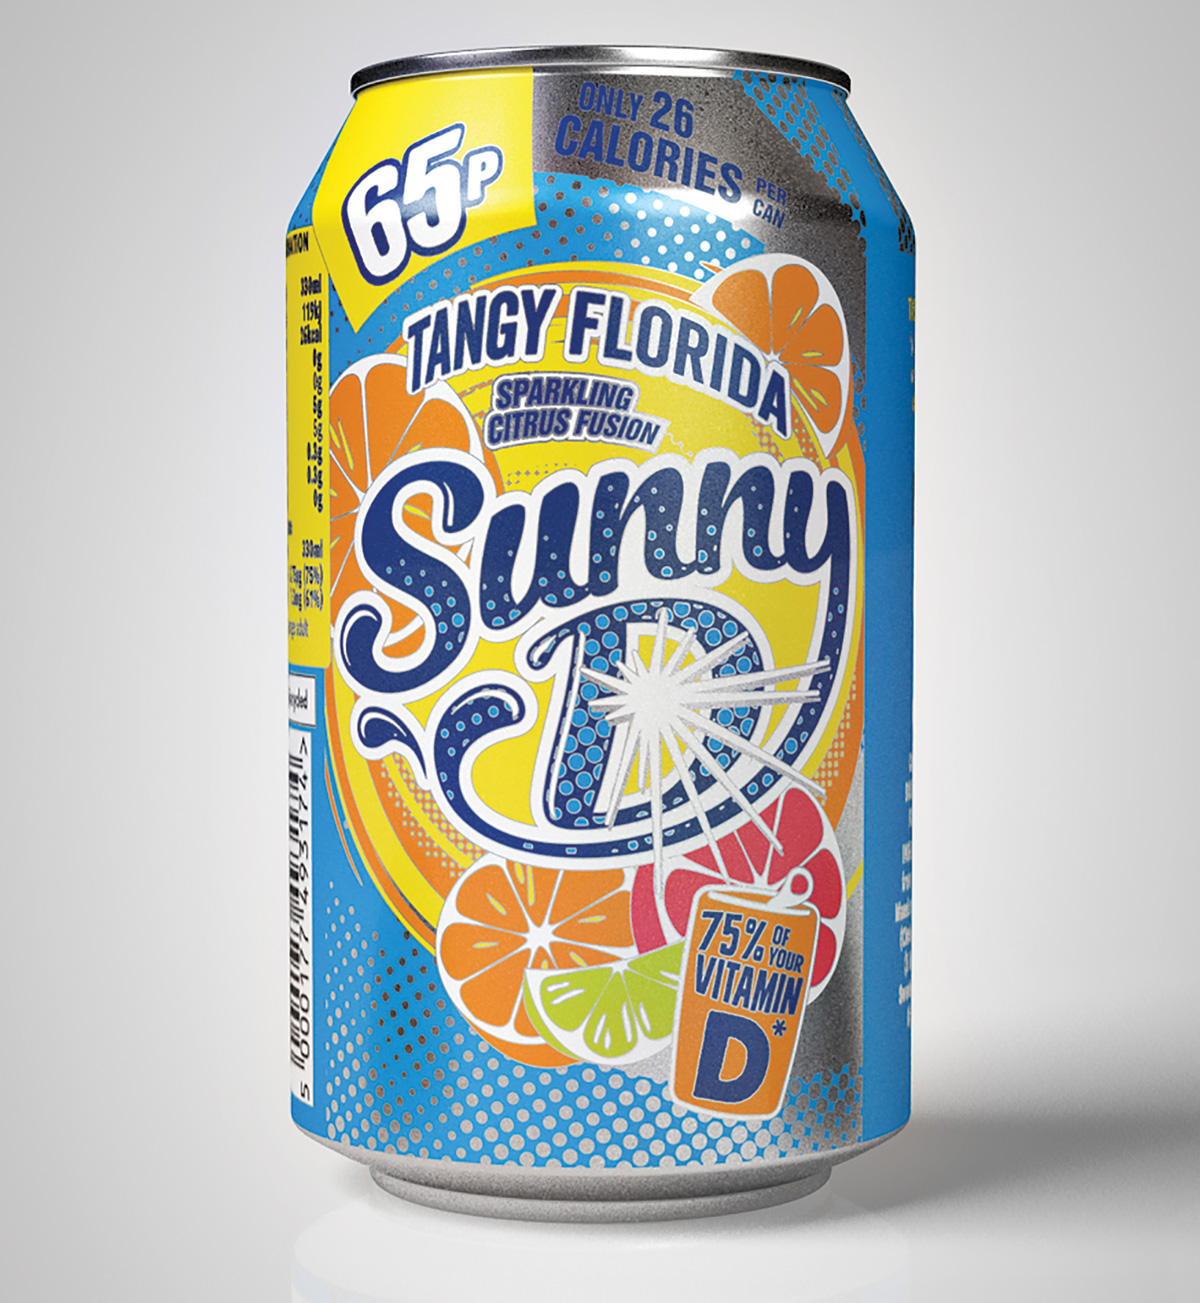 Sunny D rebrand